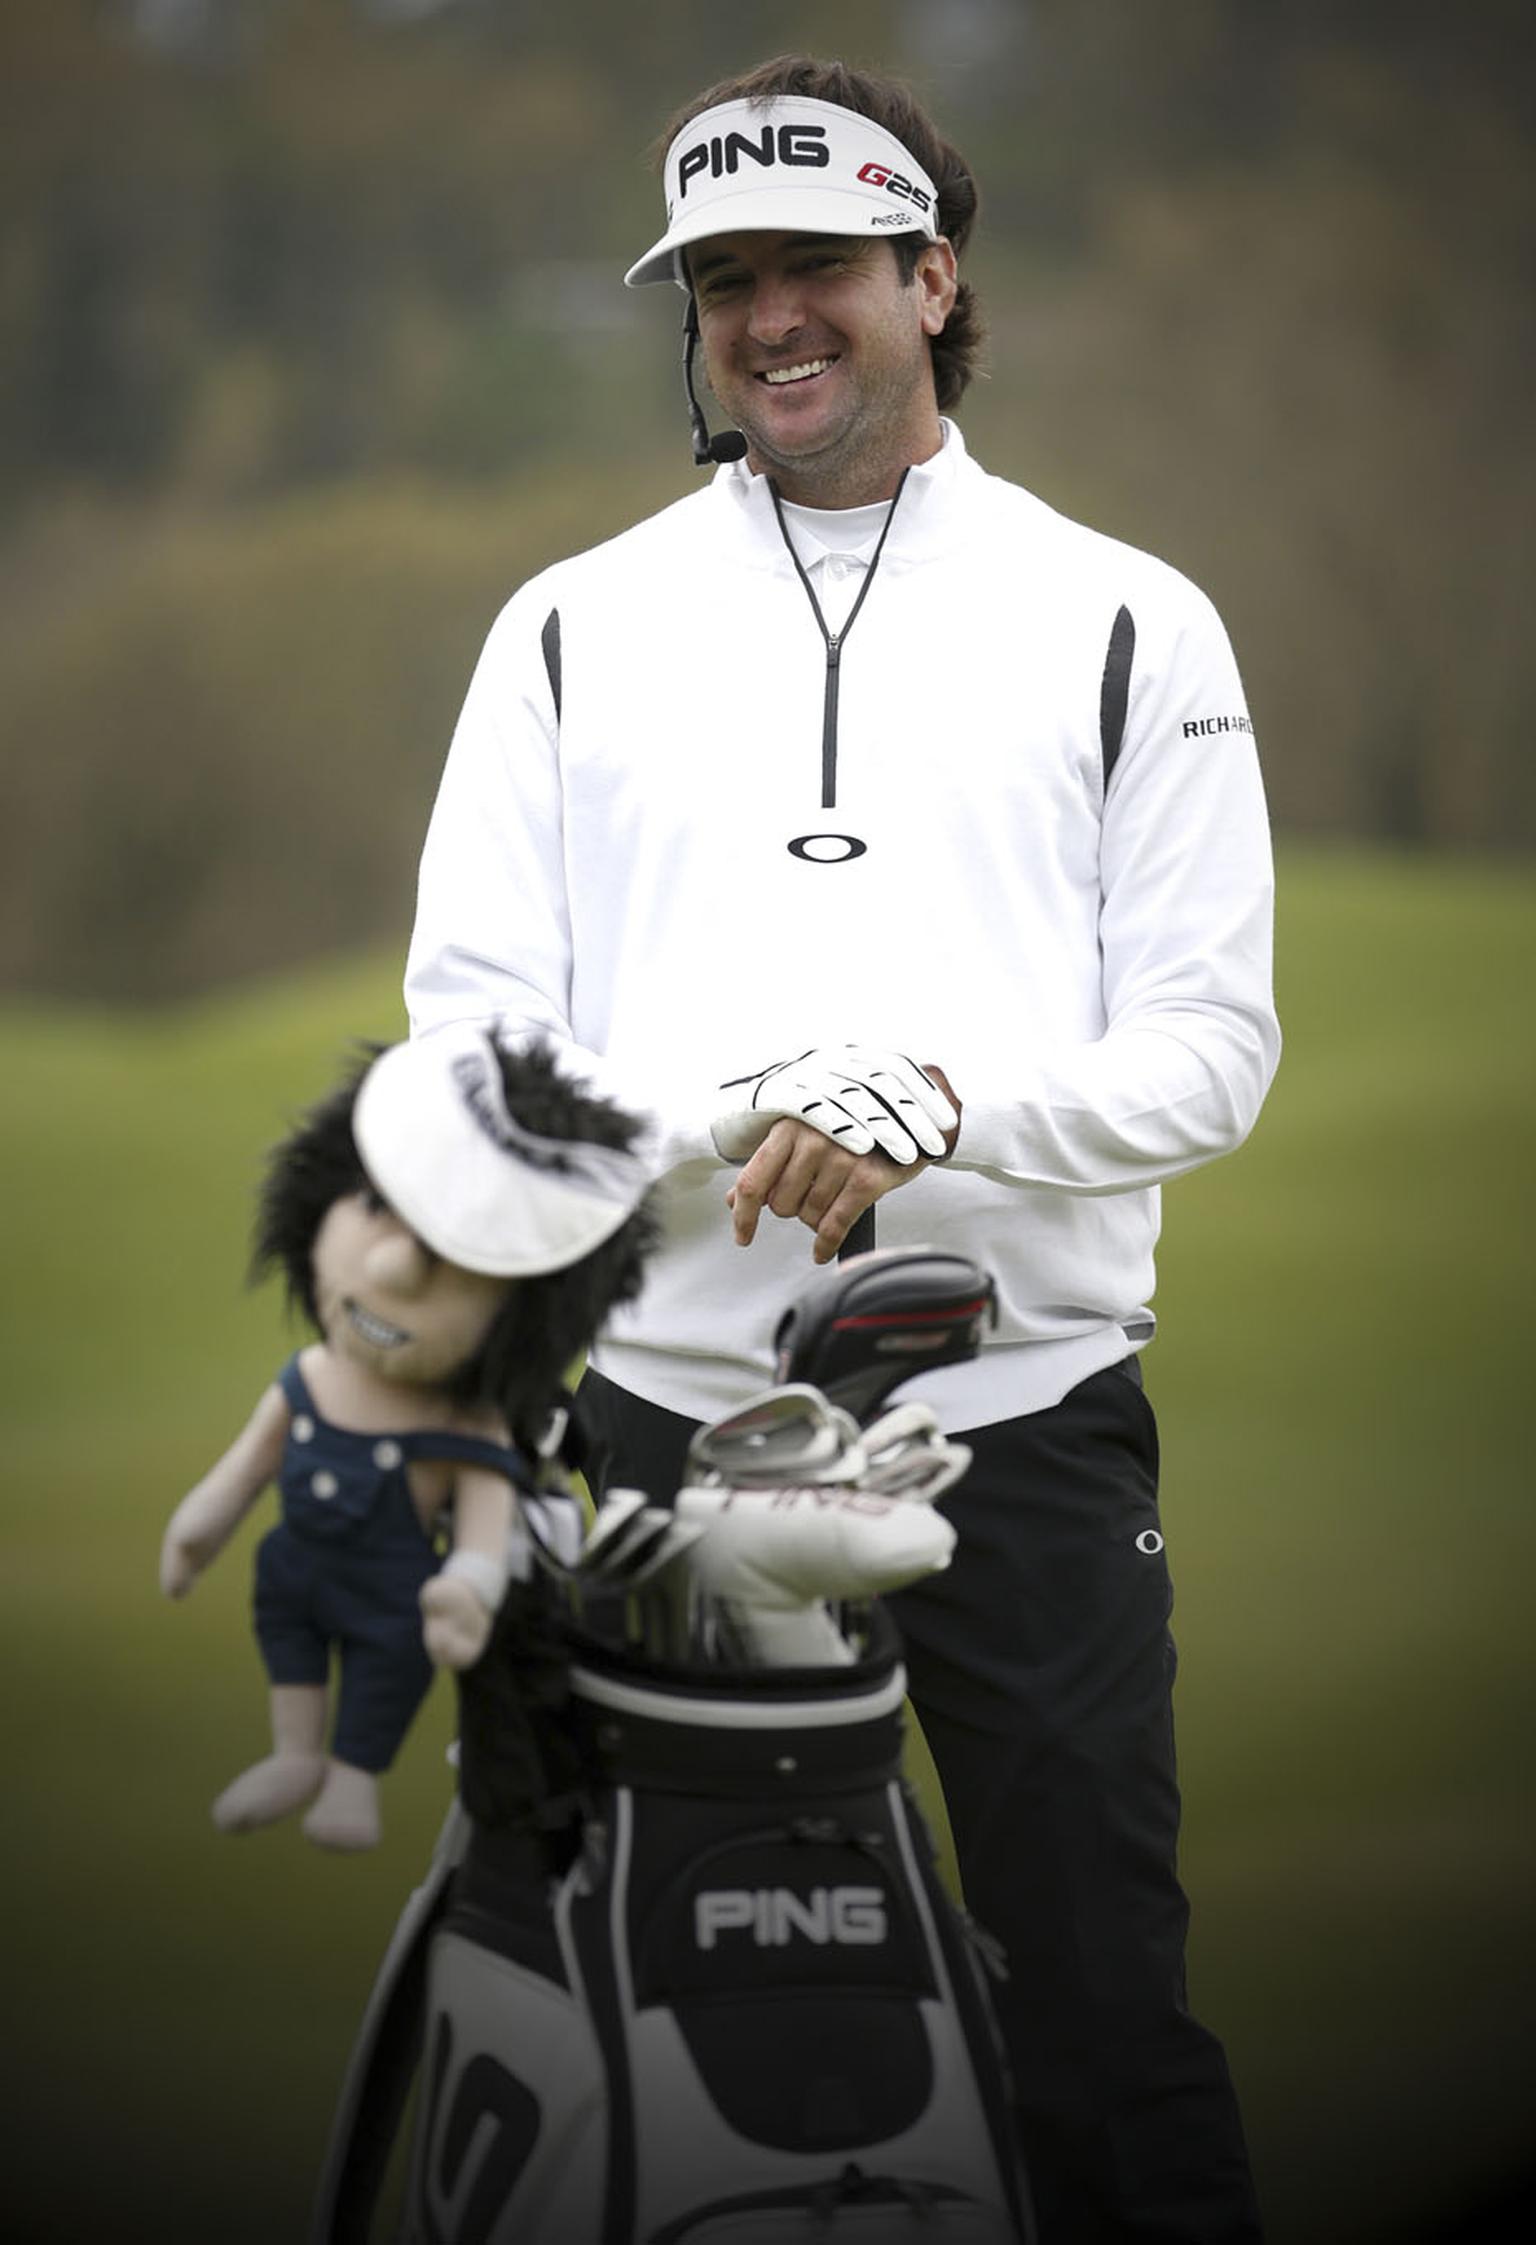 Richard Mille Invitational Golf Clinic Getty Image.jpg